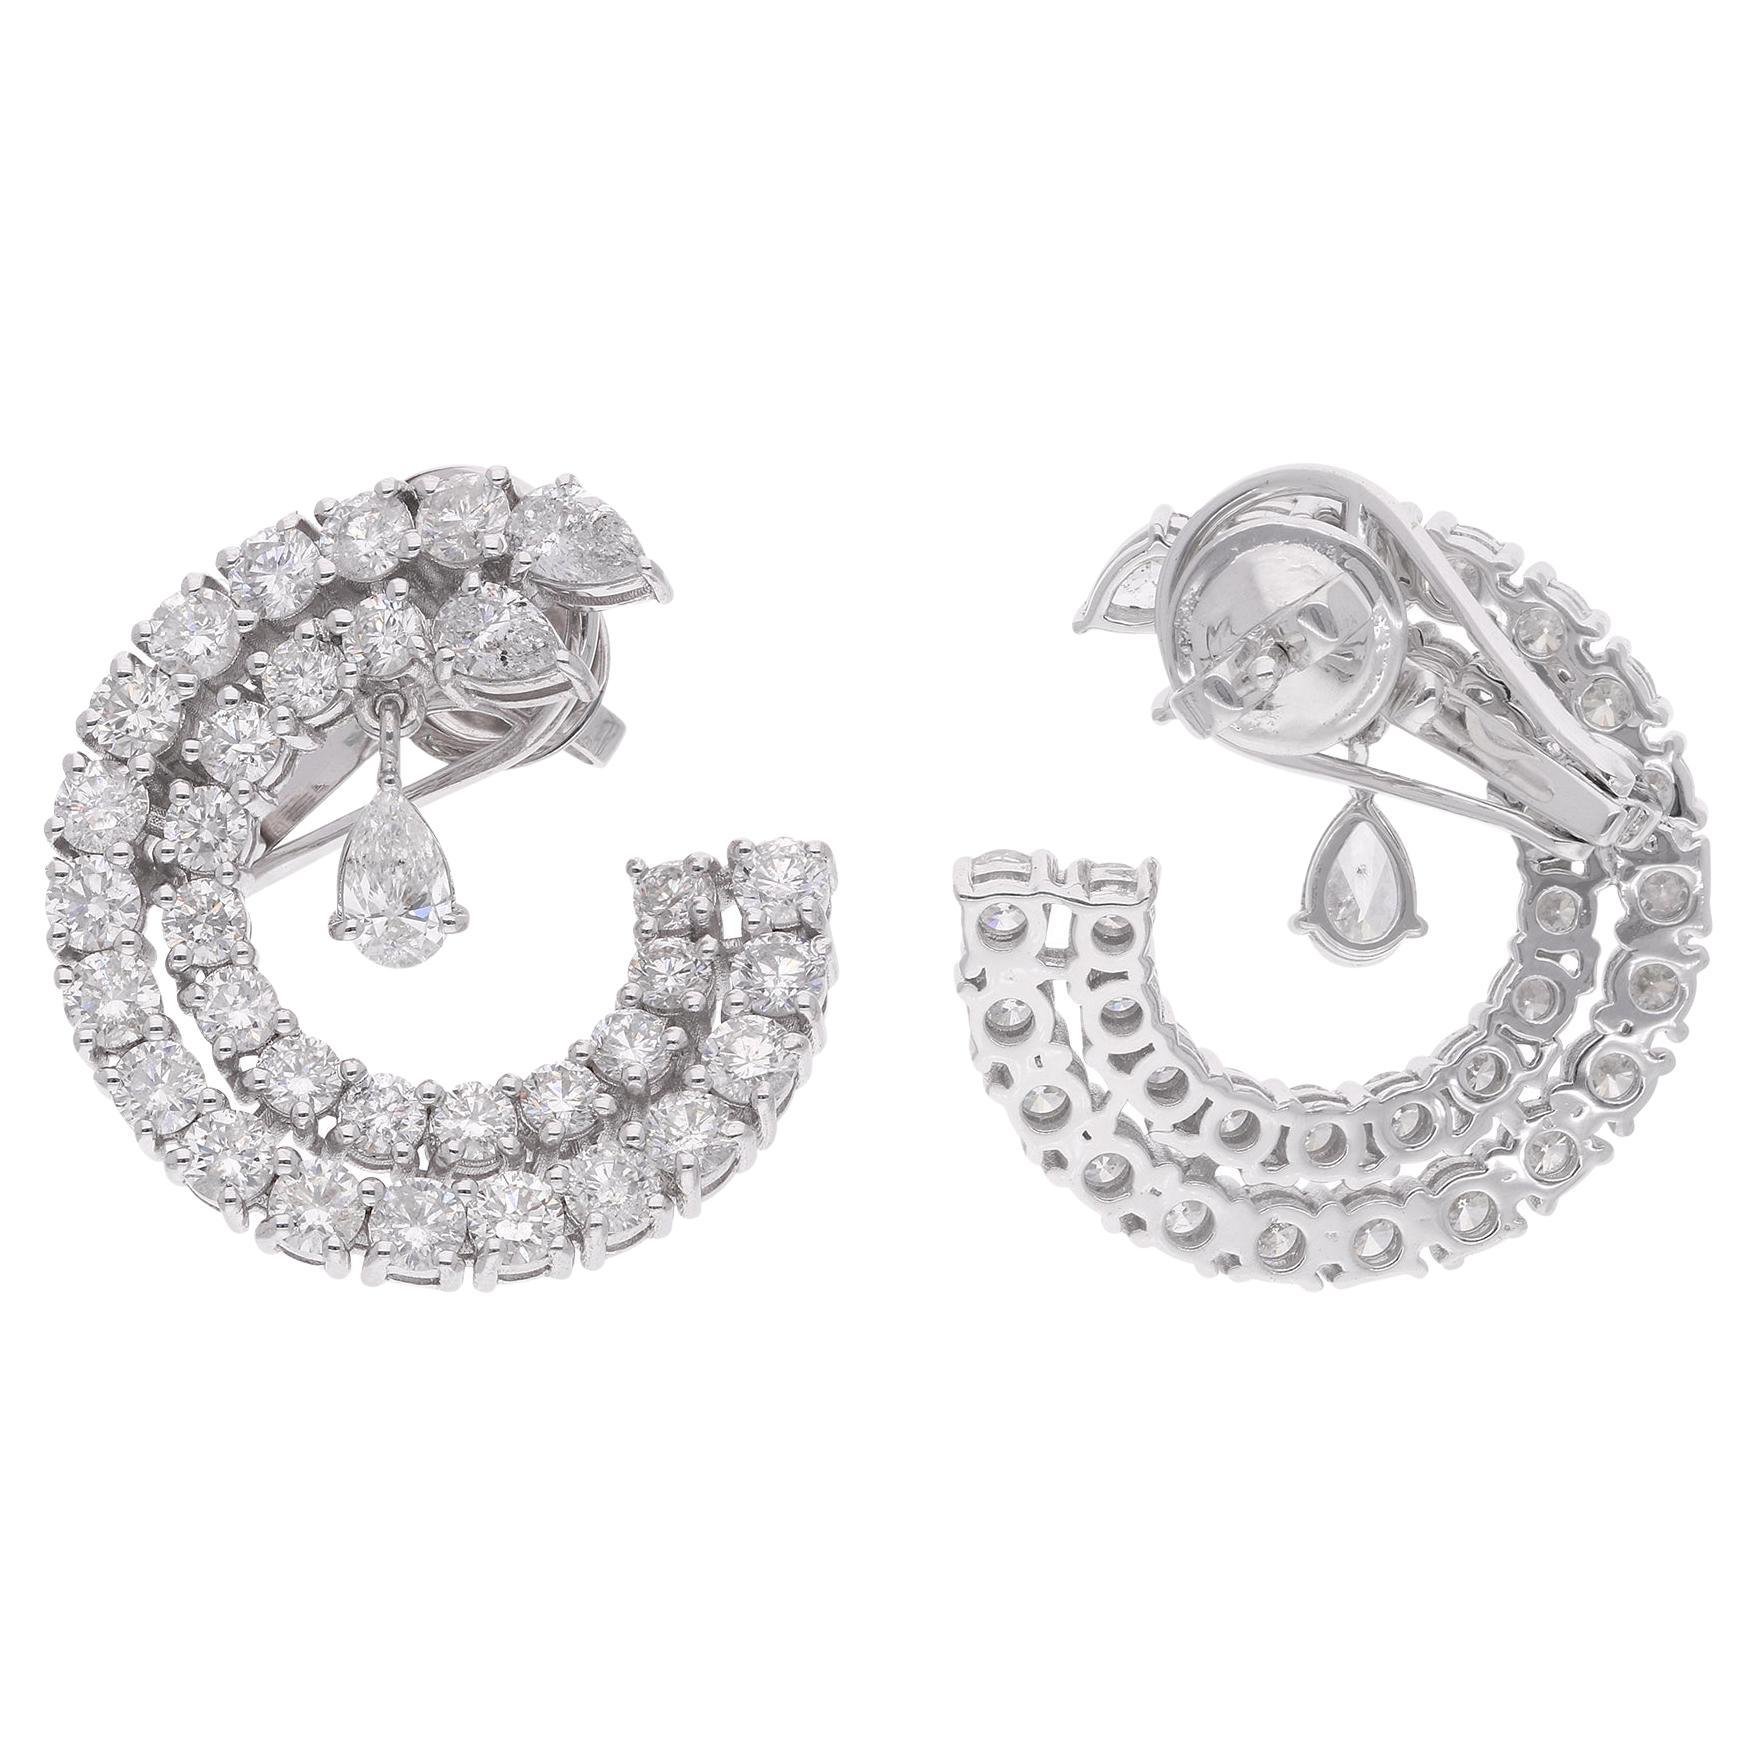 Real 5 Carat Pear & Round Diamond Earrings 18 Karat White Gold Handmade Jewelry For Sale